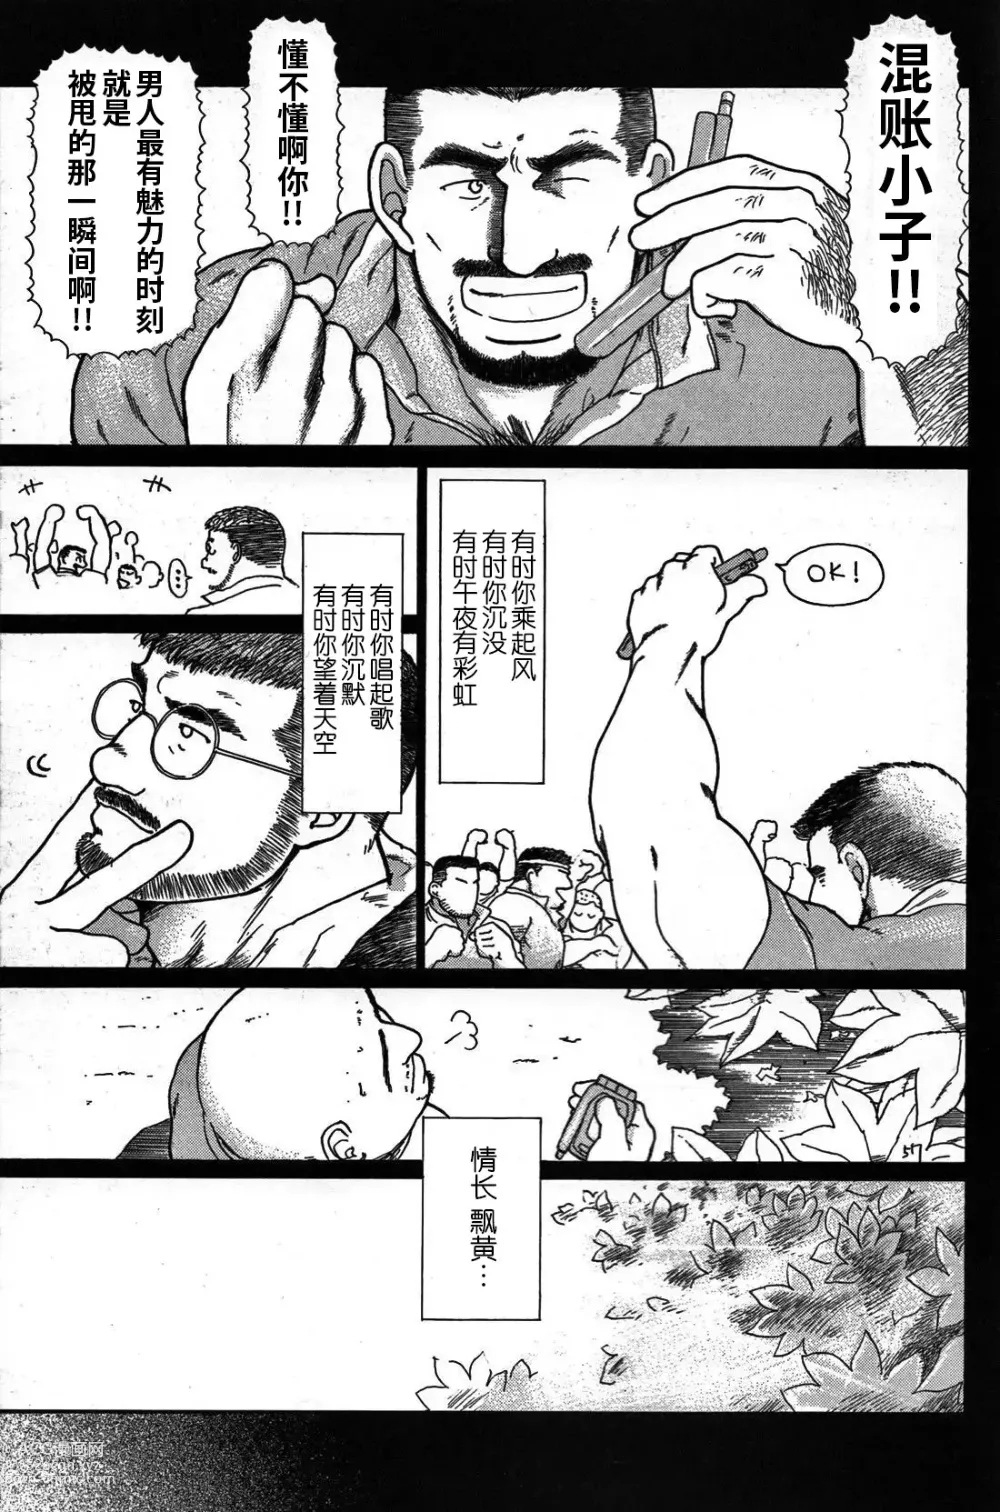 Page 108 of manga 纯情!! 第三章 「纯真」